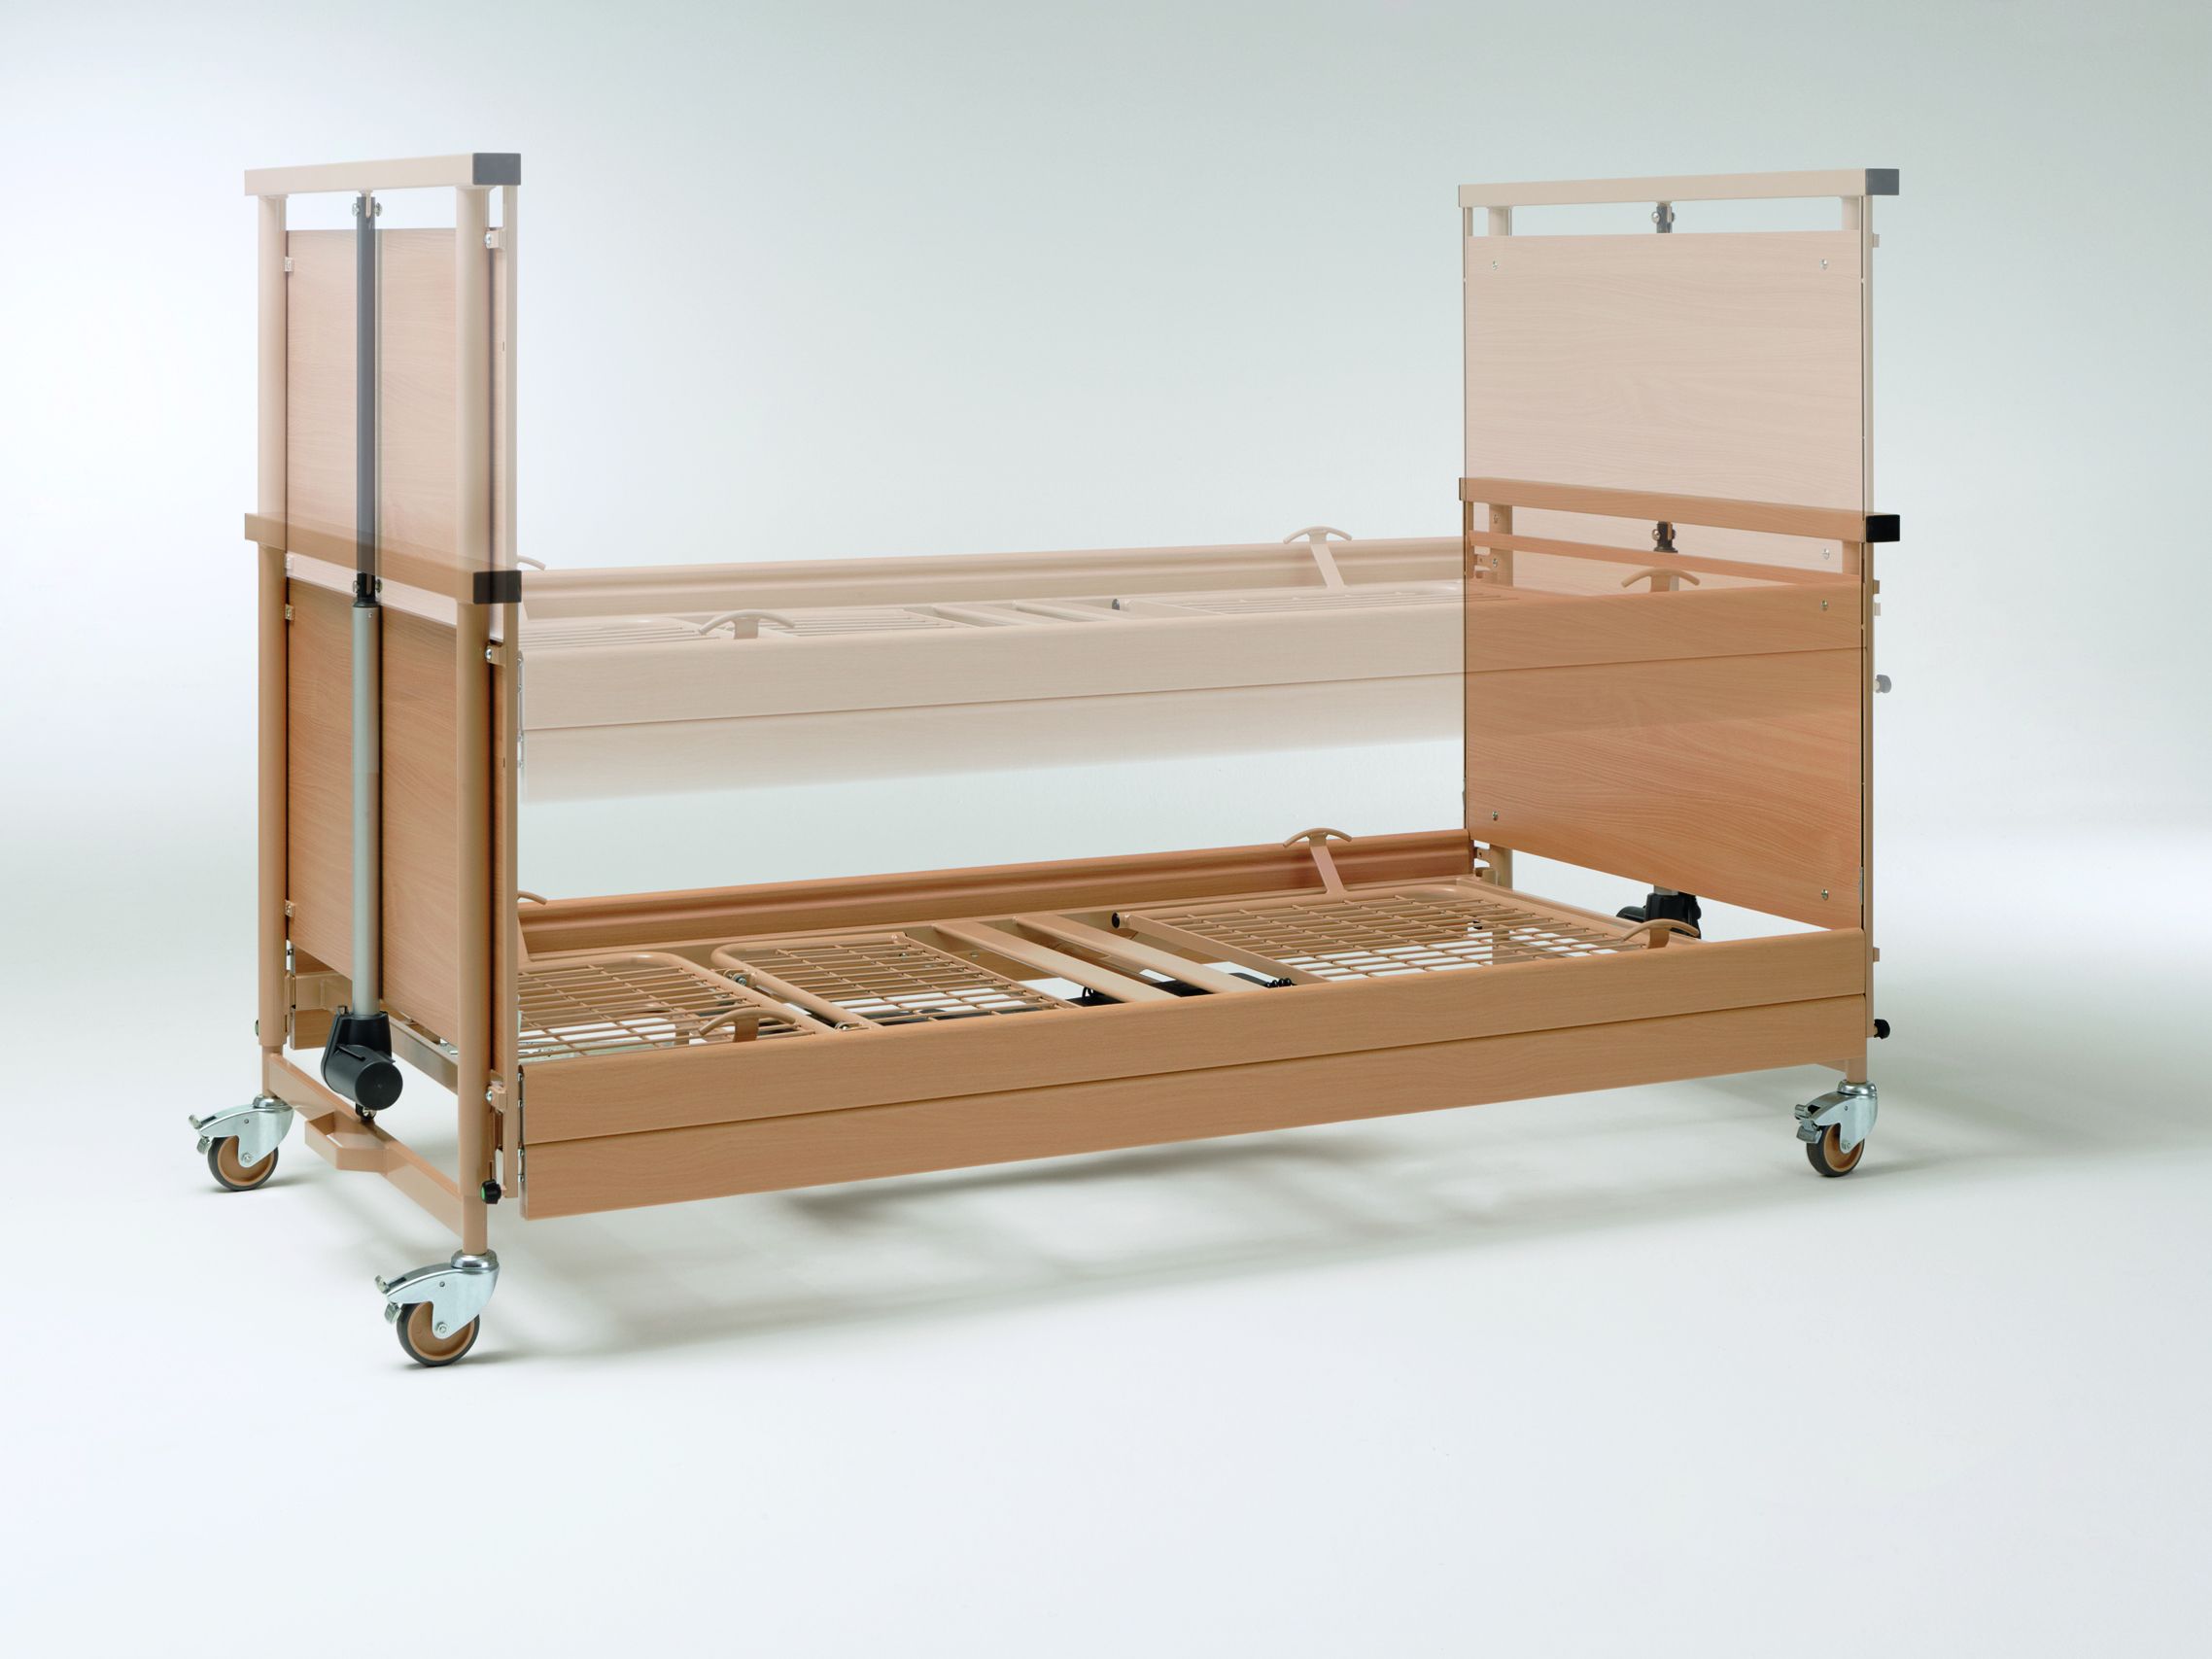 Large height adjustment range of the Allura II heavy-duty bed